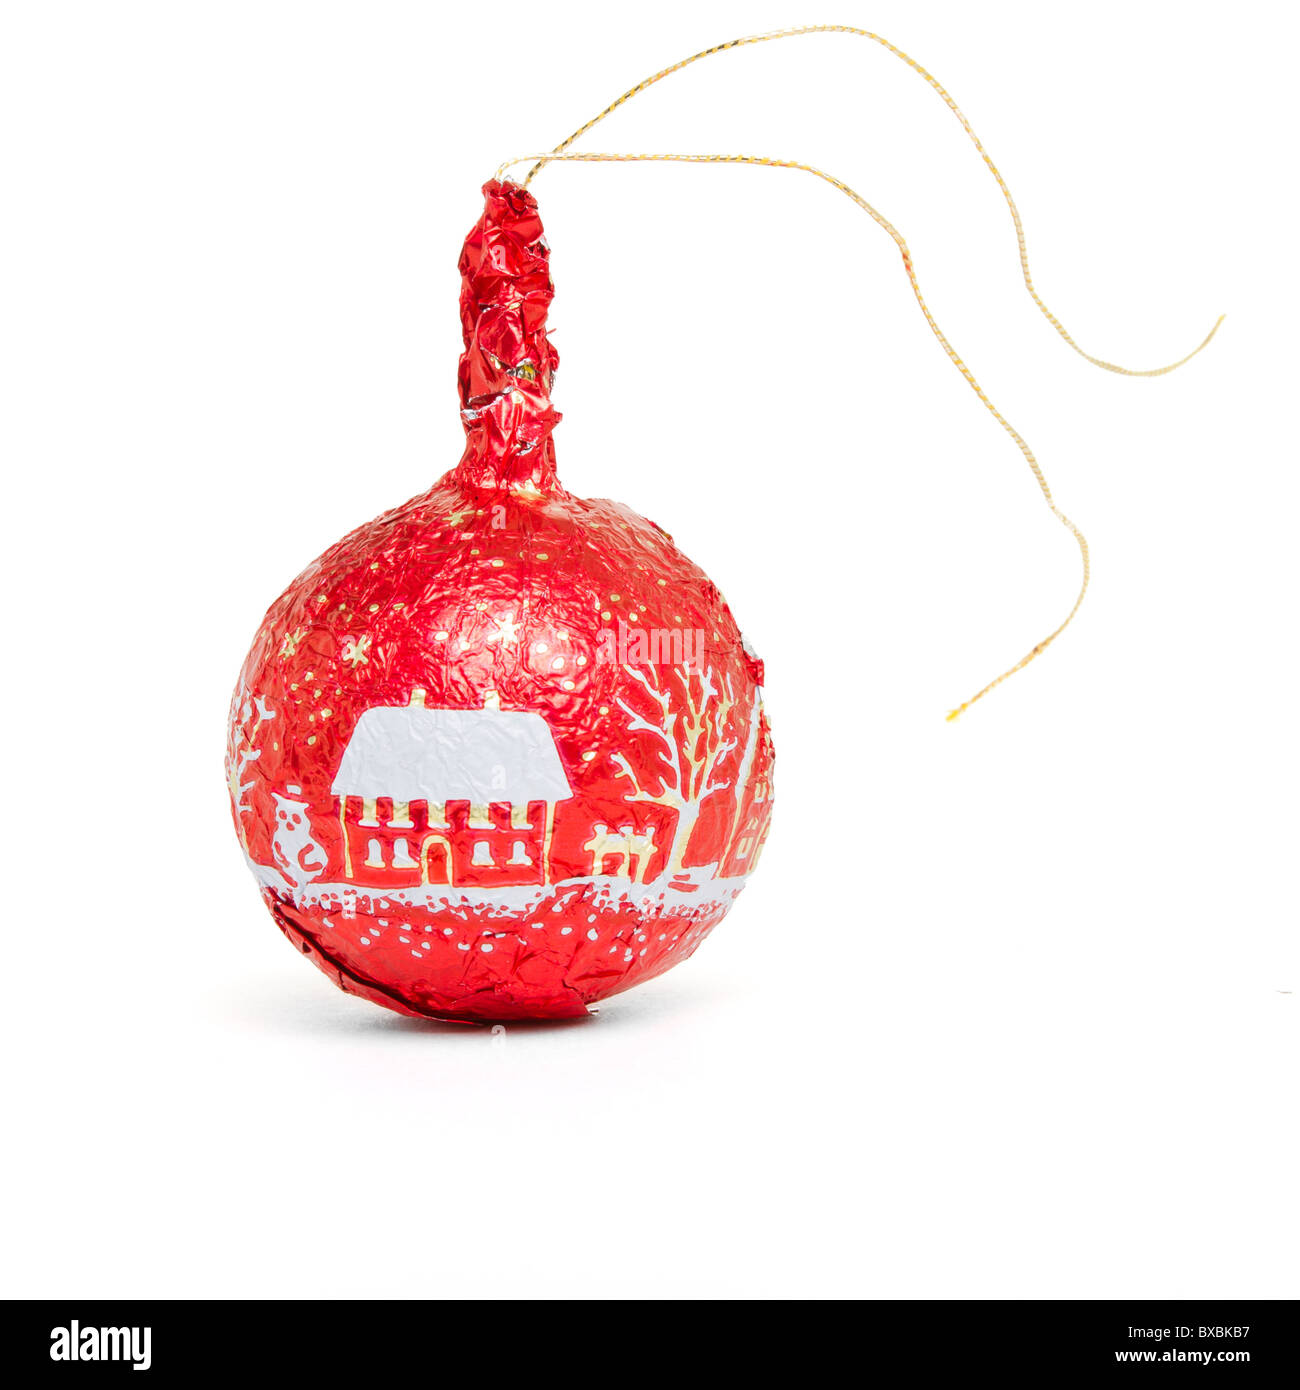 https://c8.alamy.com/compde/bxbkb7/rote-folie-verpackt-schokolade-weihnachtskugel-weihnachten-baumschmuck-isoliert-auf-weiss-bxbkb7.jpg